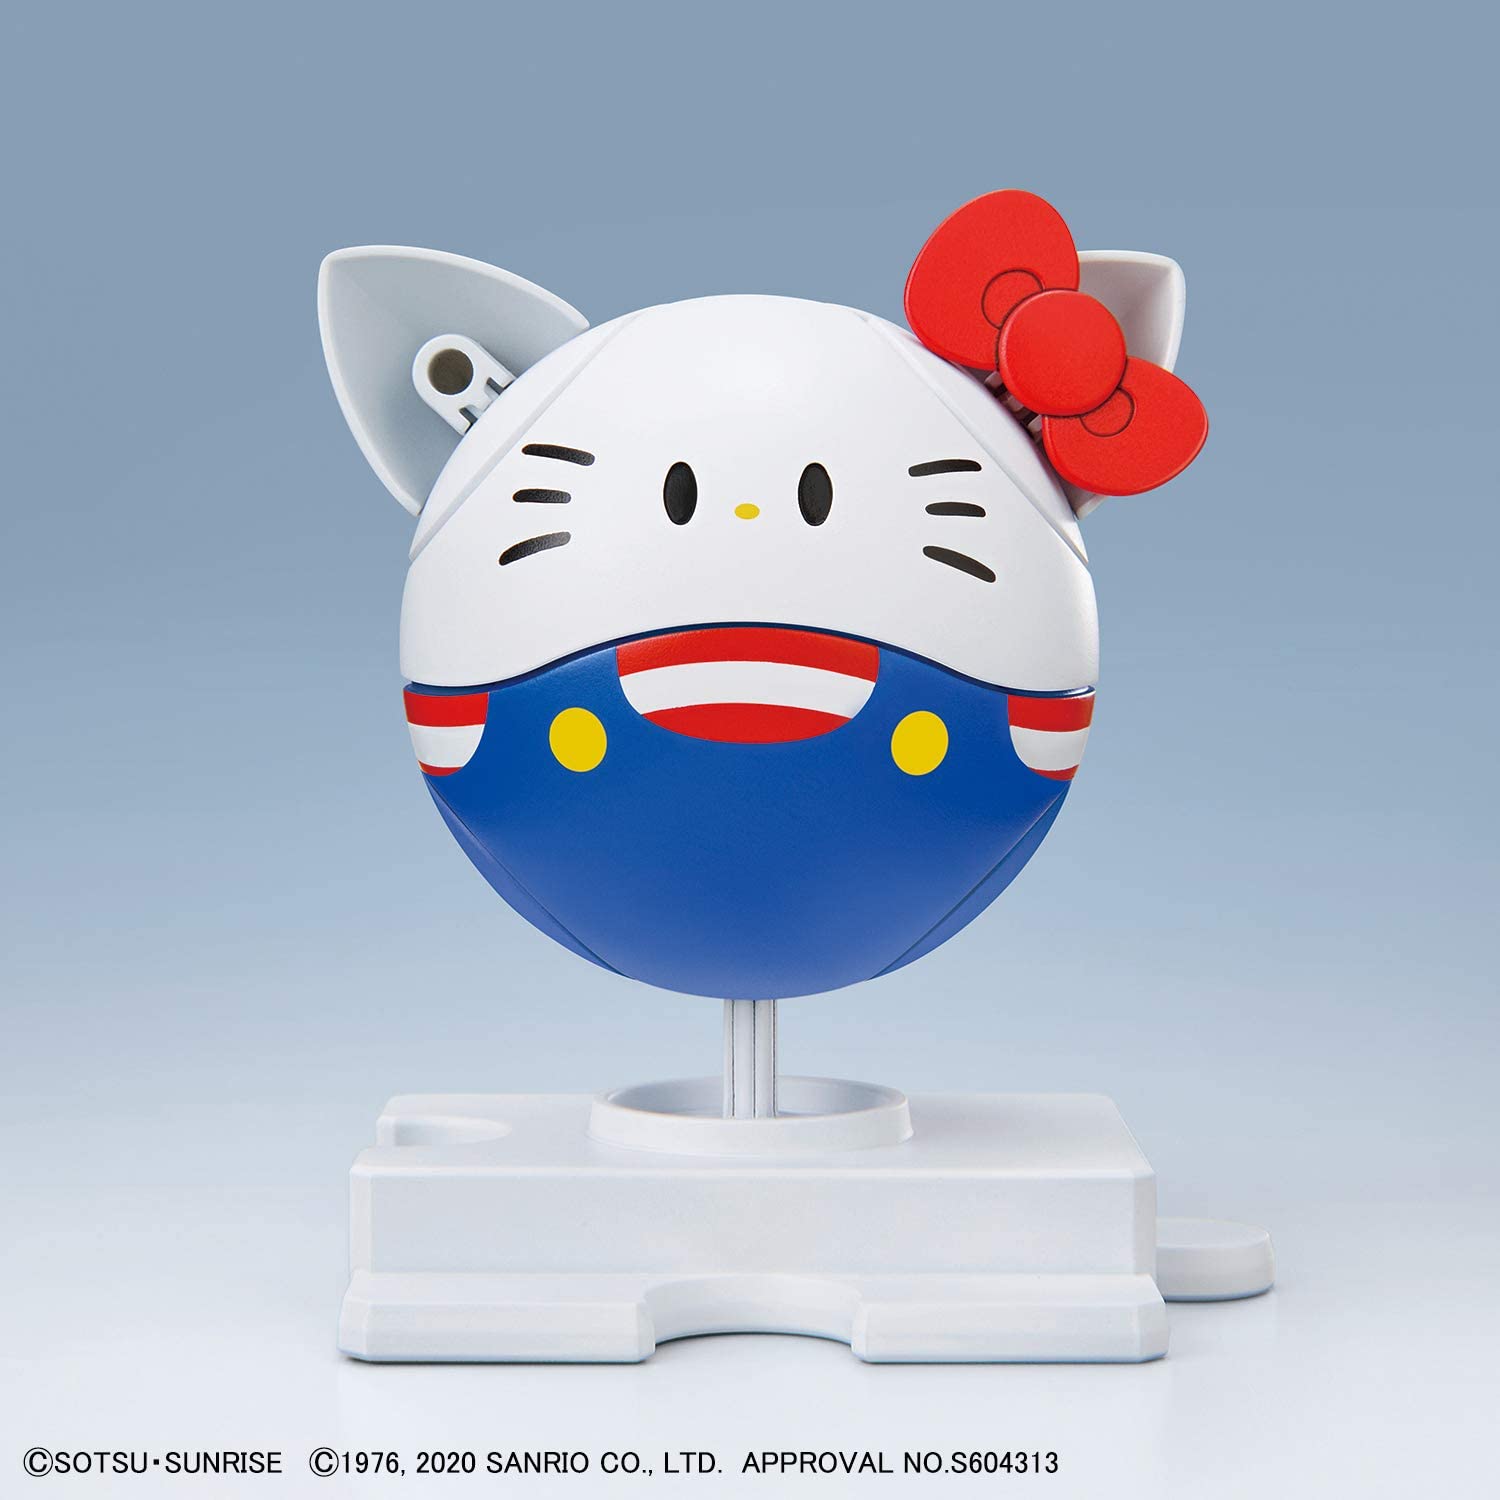 Haropla - Hello Kitty Haro (Anniversary Model)